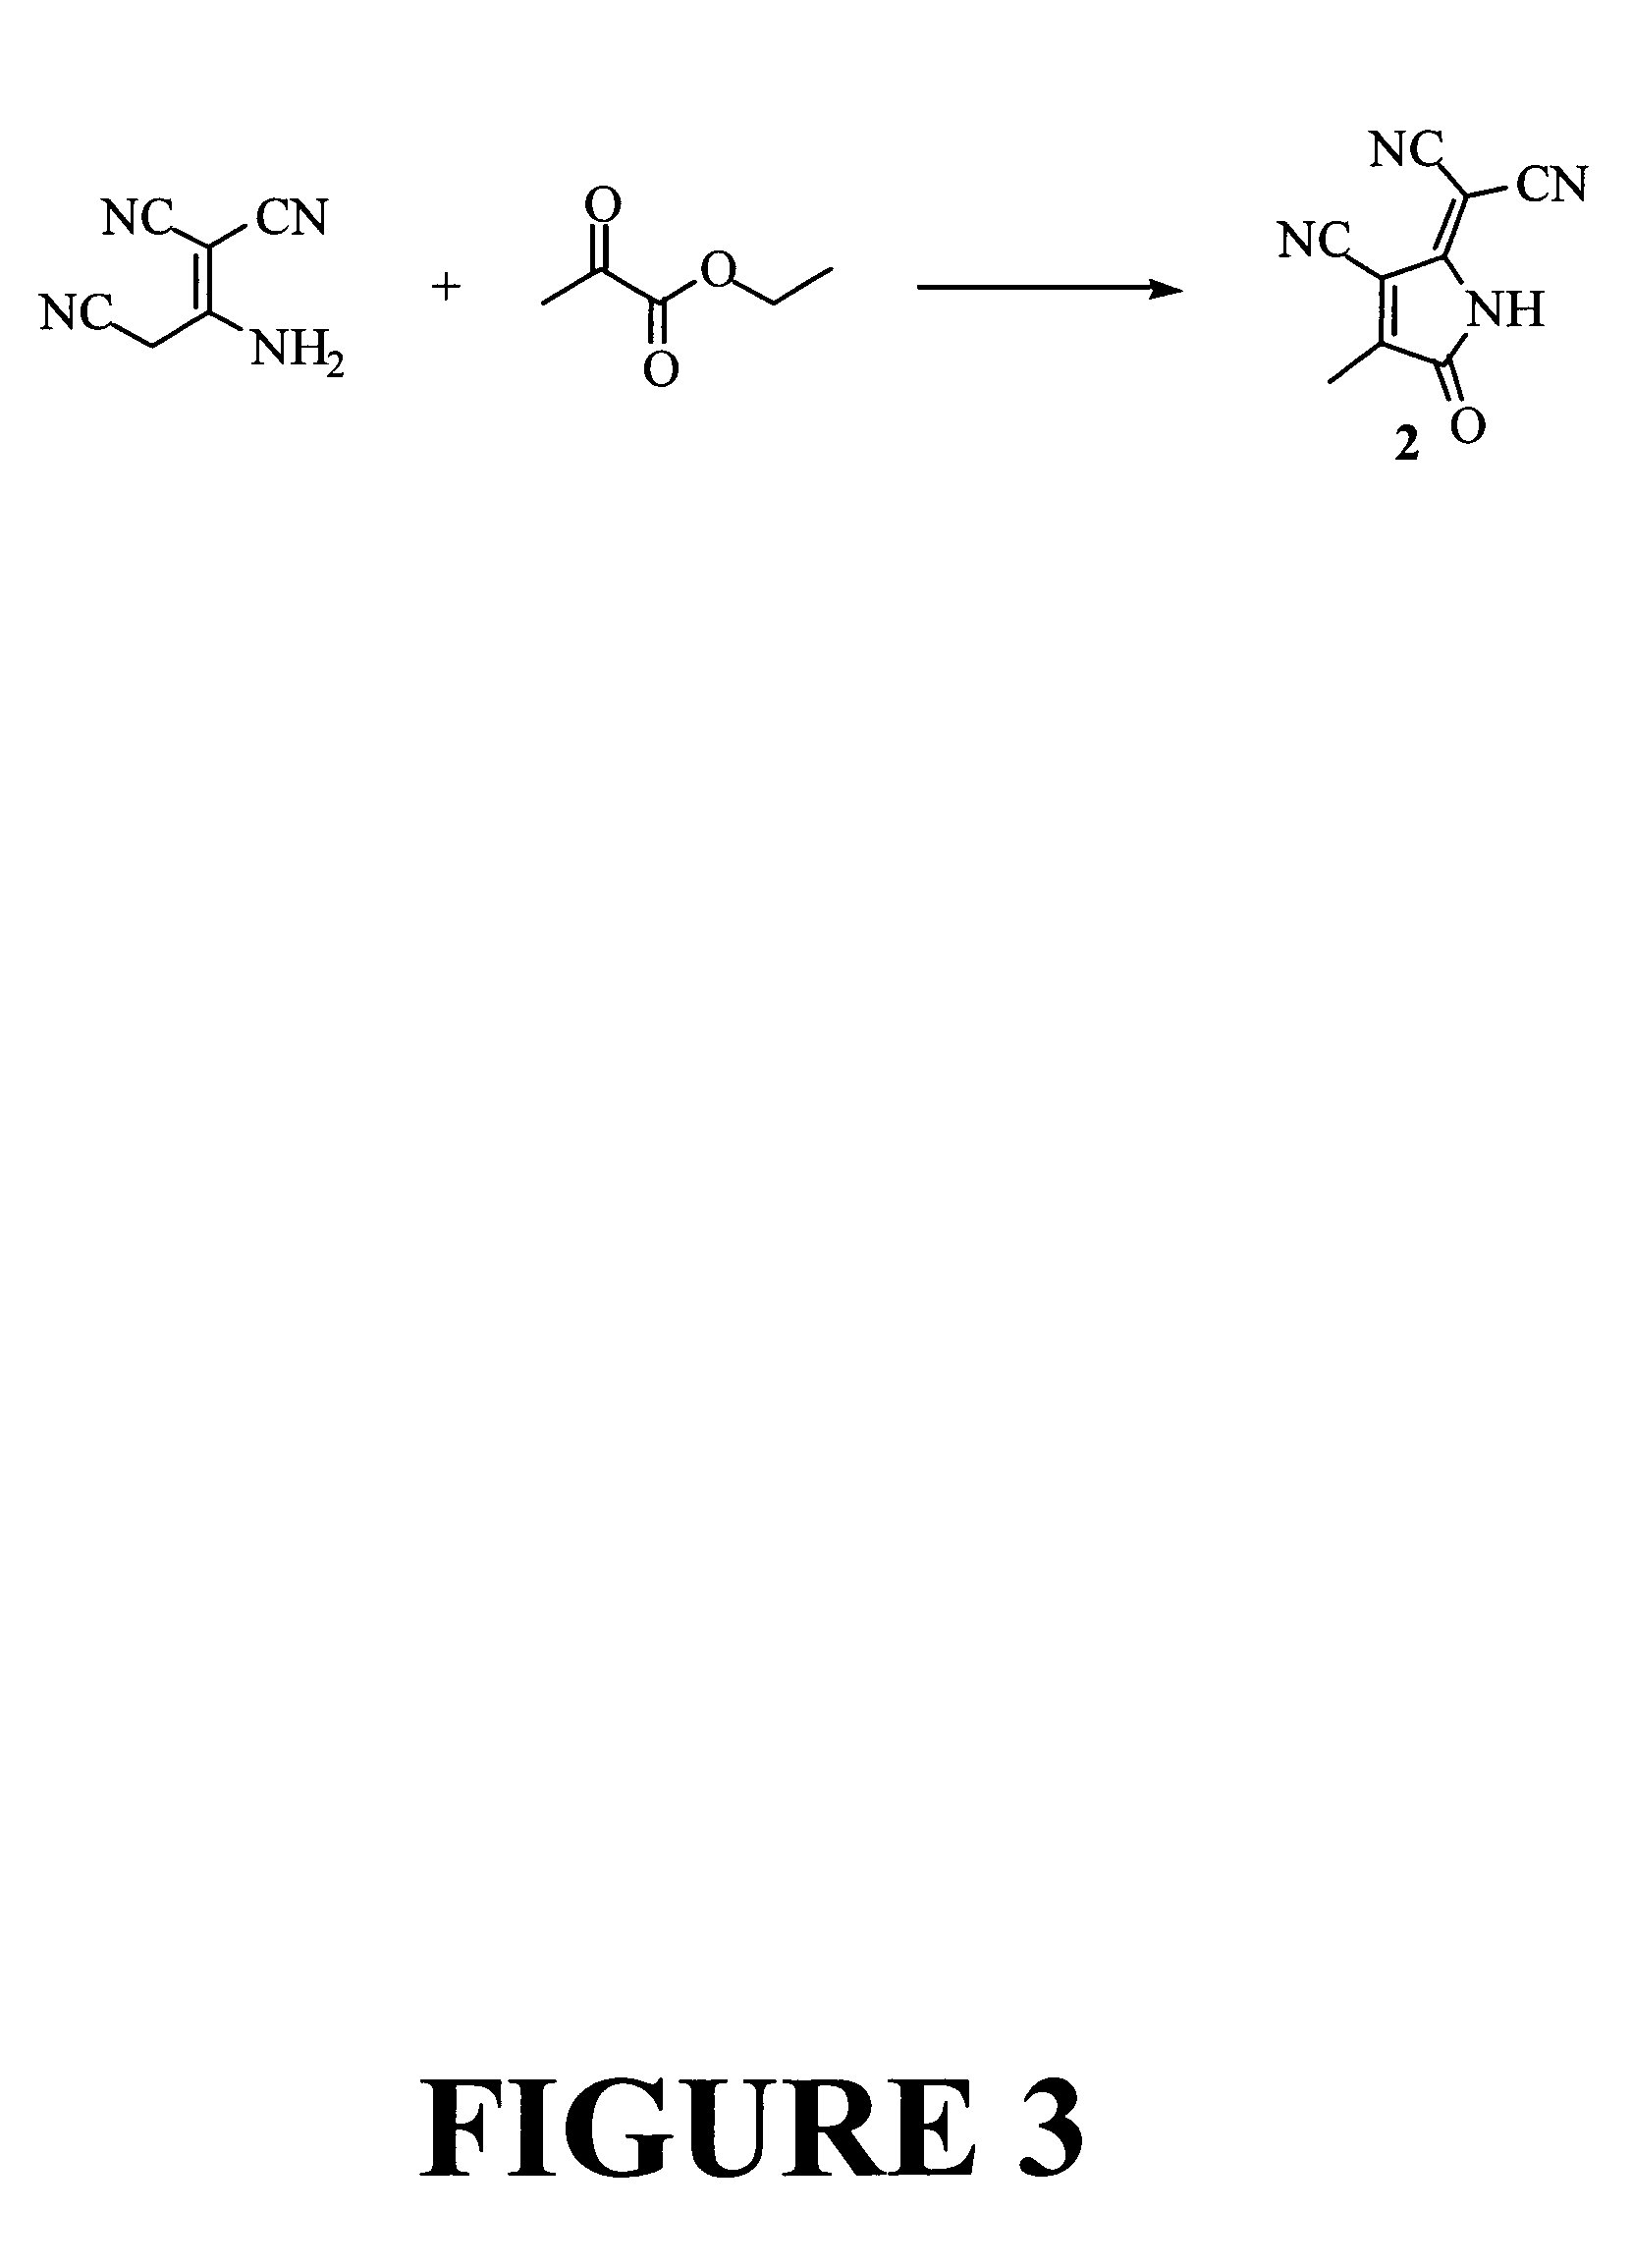 Pyrroline chromophores